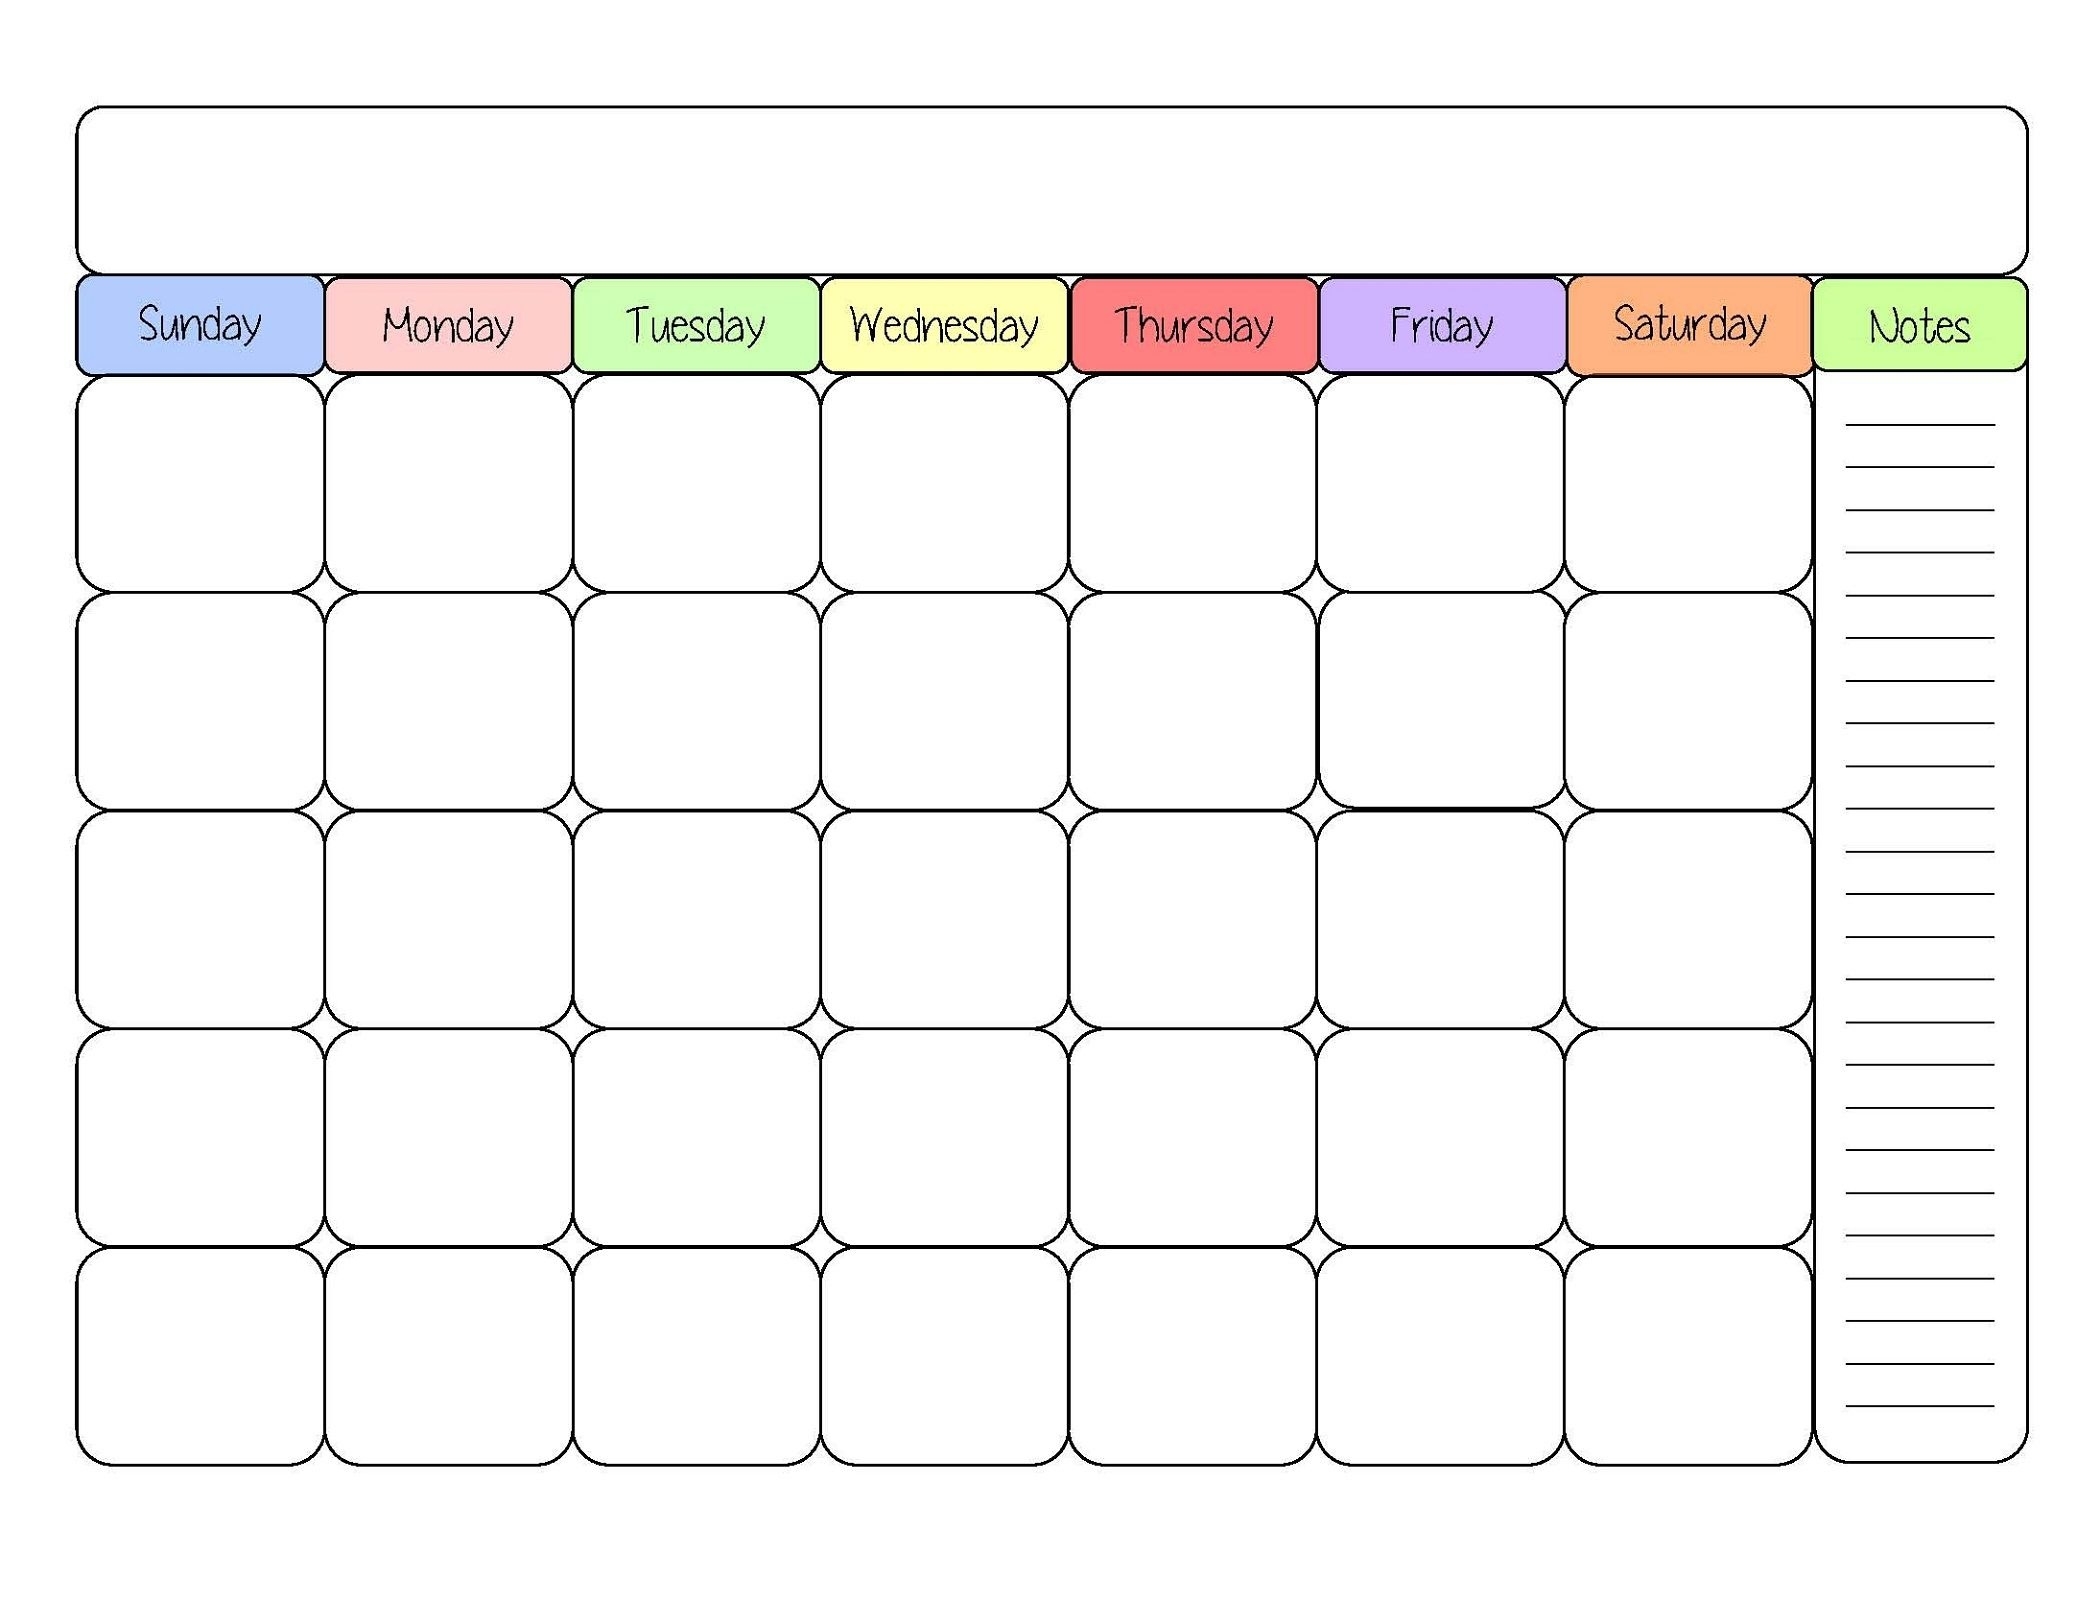 Sample Calendars To Print | Weekly Calendar Template, Free Sample Of Calendar Template